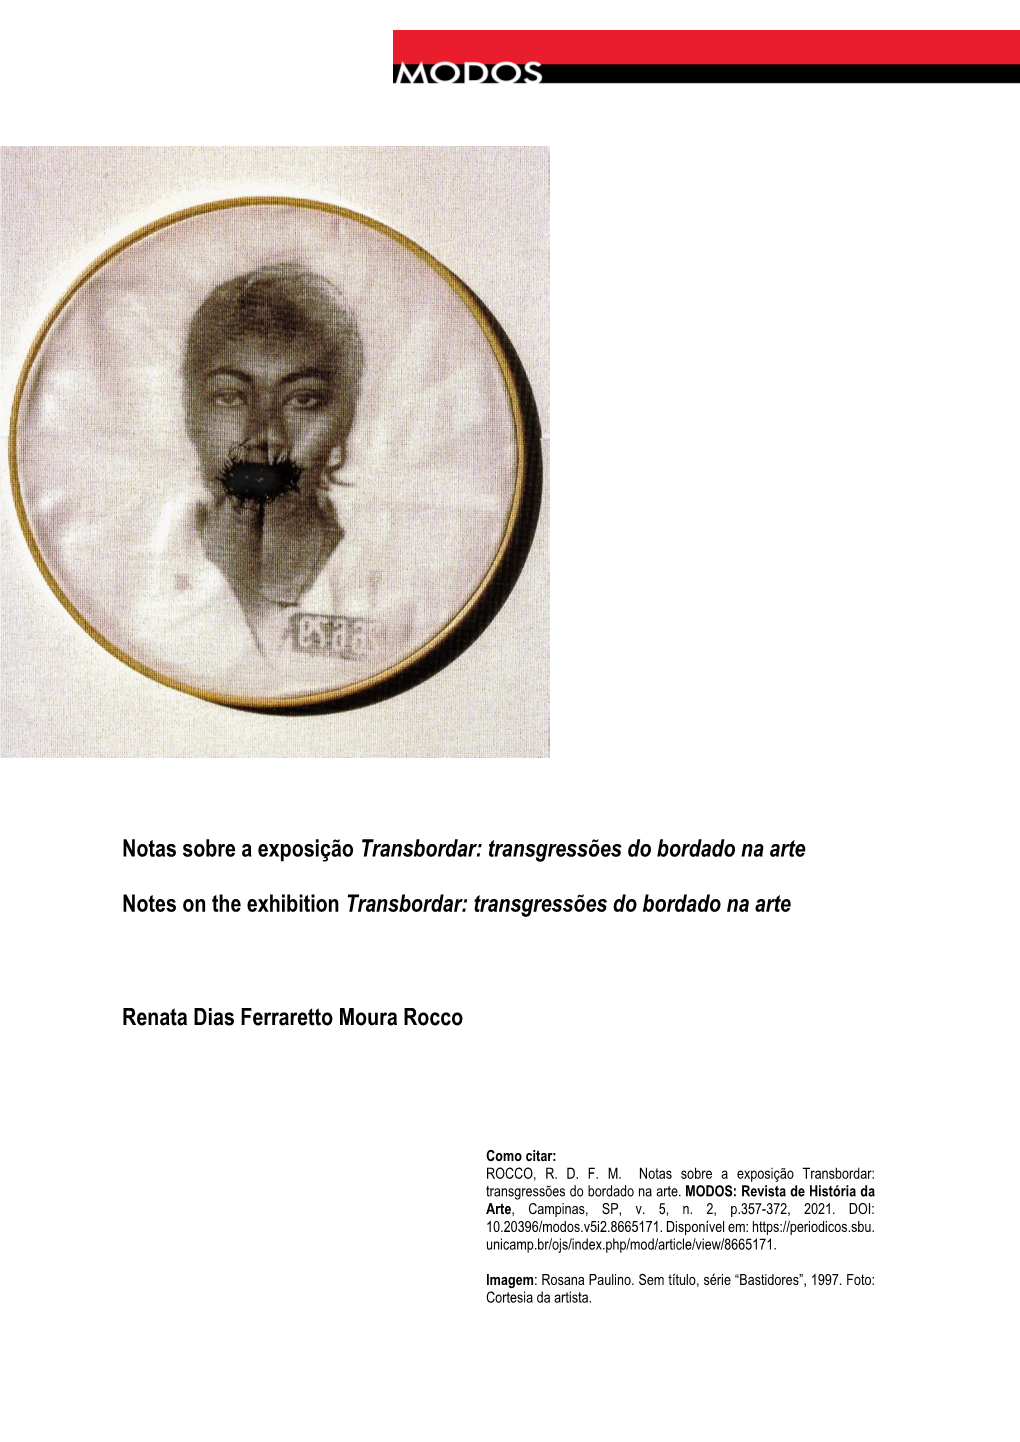 Transgressões Do Bordado Na Arte Notes on the Exhibition Transbordar